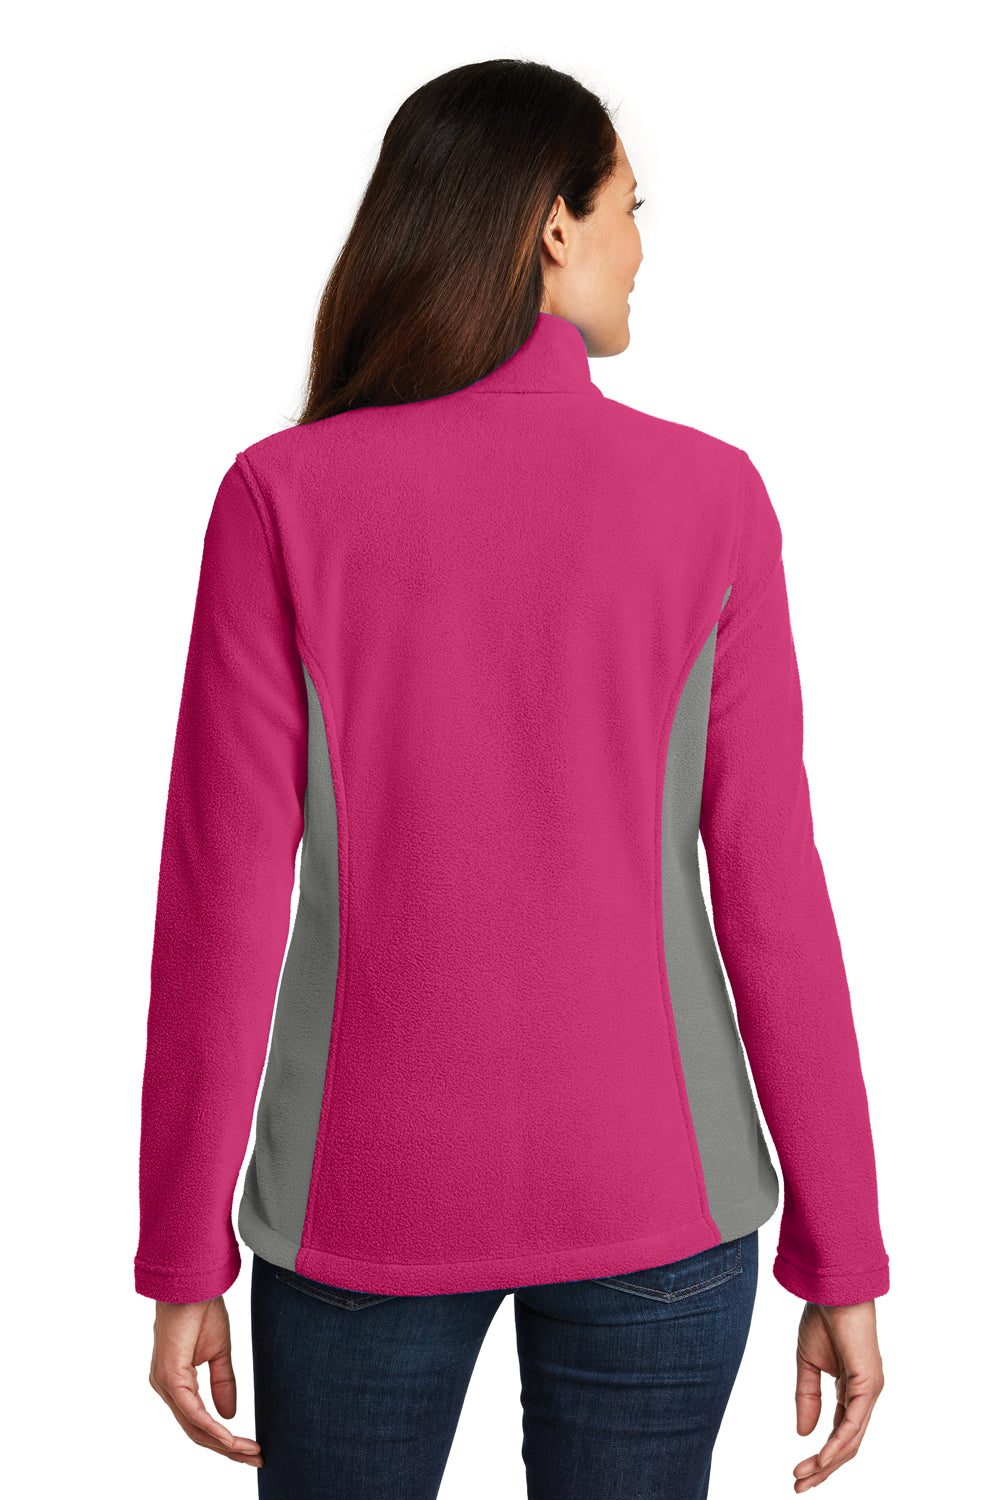 Port Authority L216 Womens Full Zip Fleece Jacket Pink Azalea/Grey Back